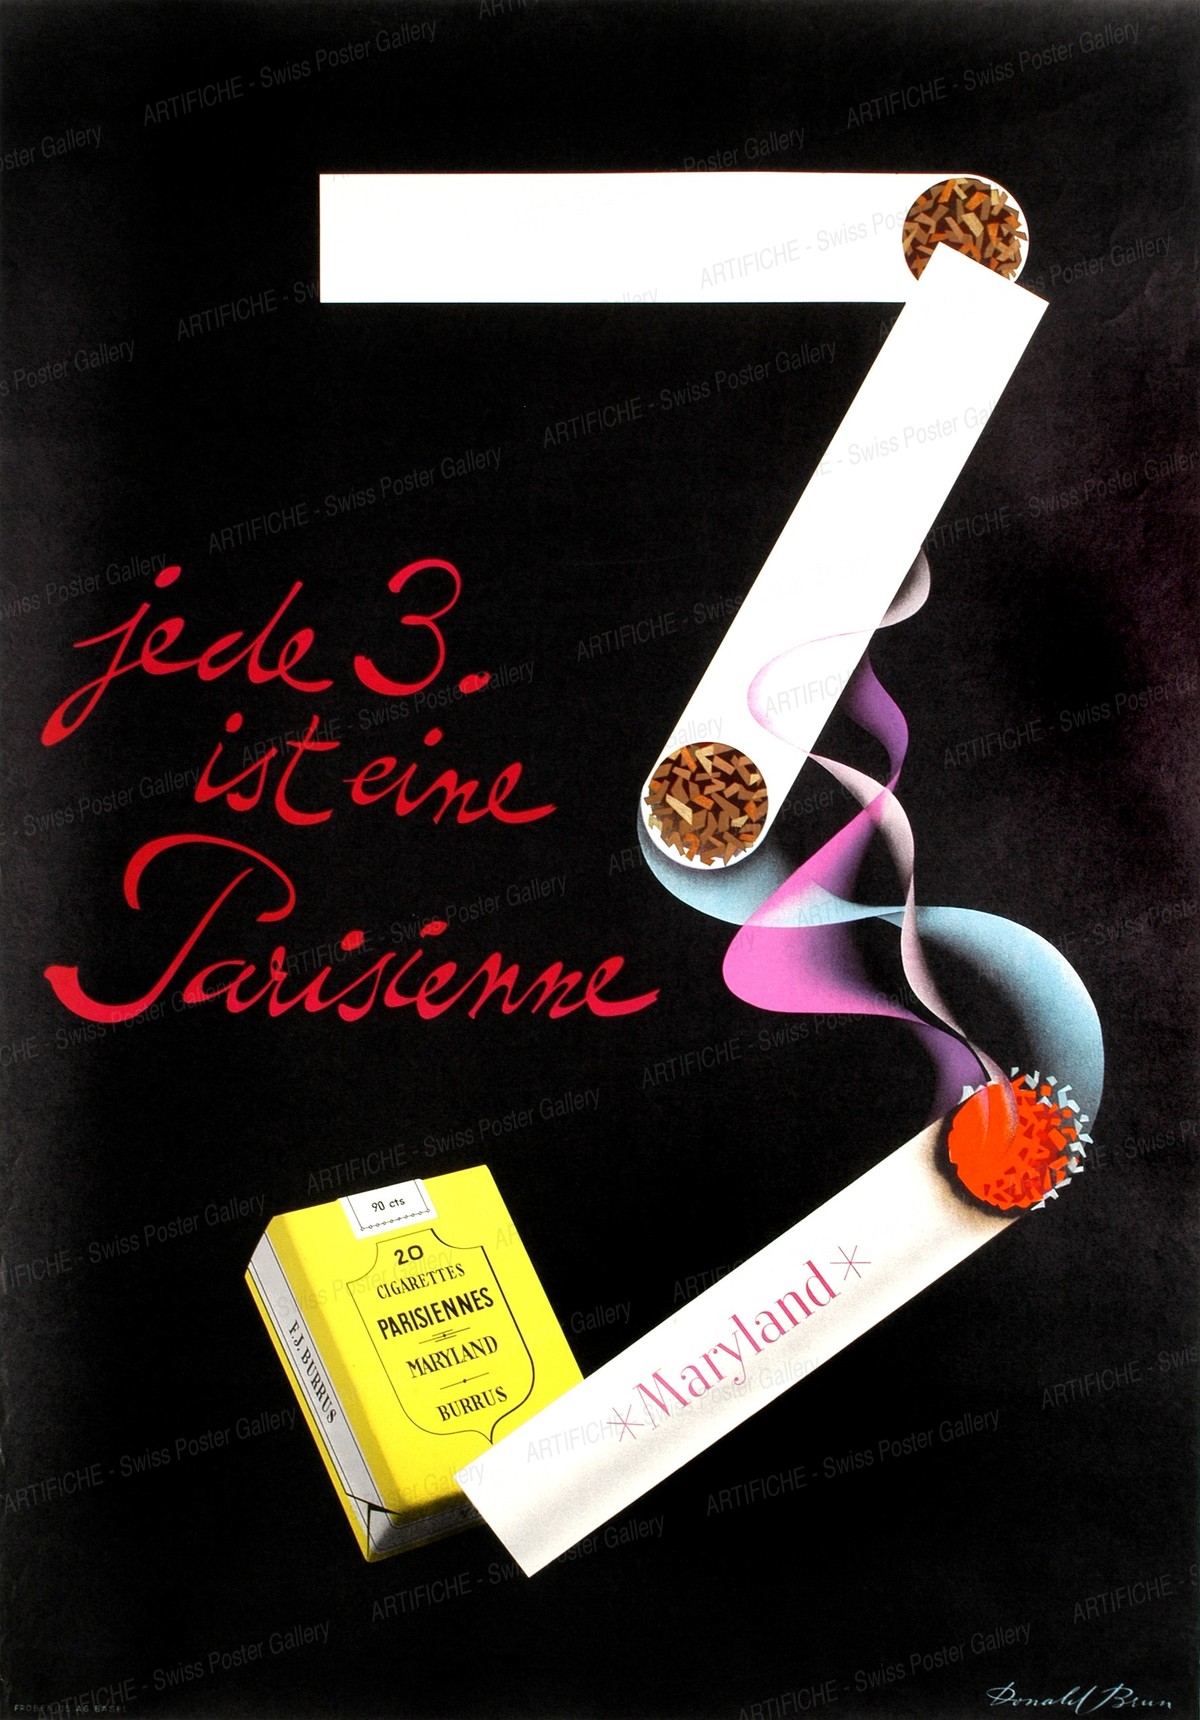 Parisiennes Cigarettes – evary 3rd one is a Parisienne, Donald Brun